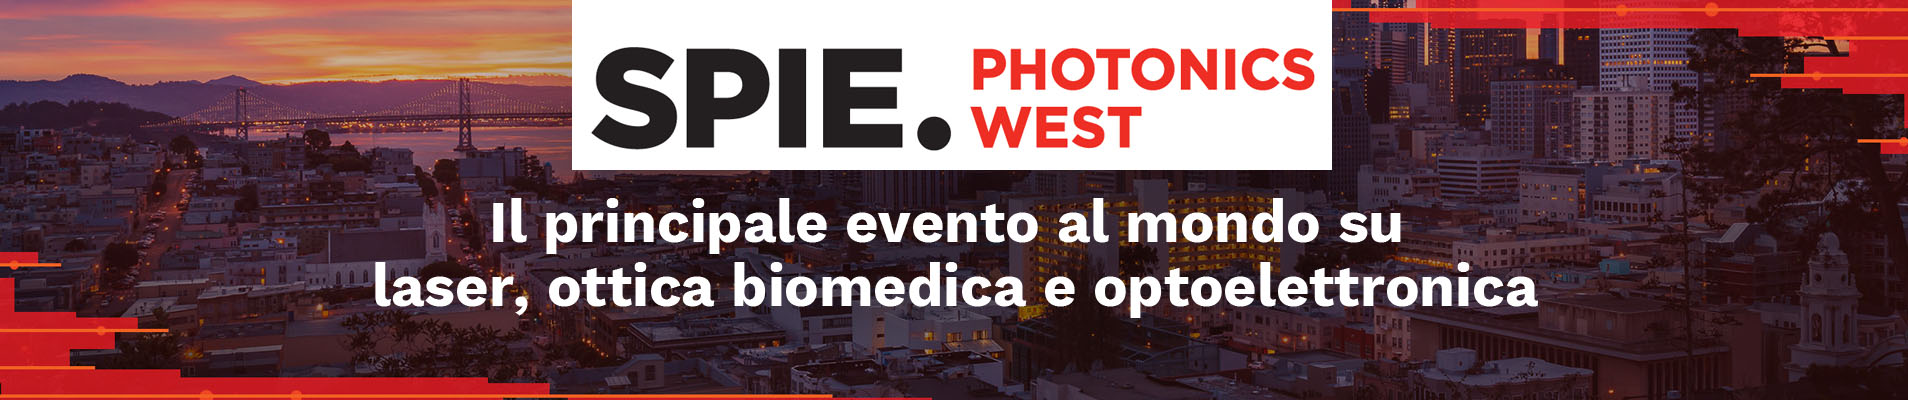 spie_photonic_west2022_banner